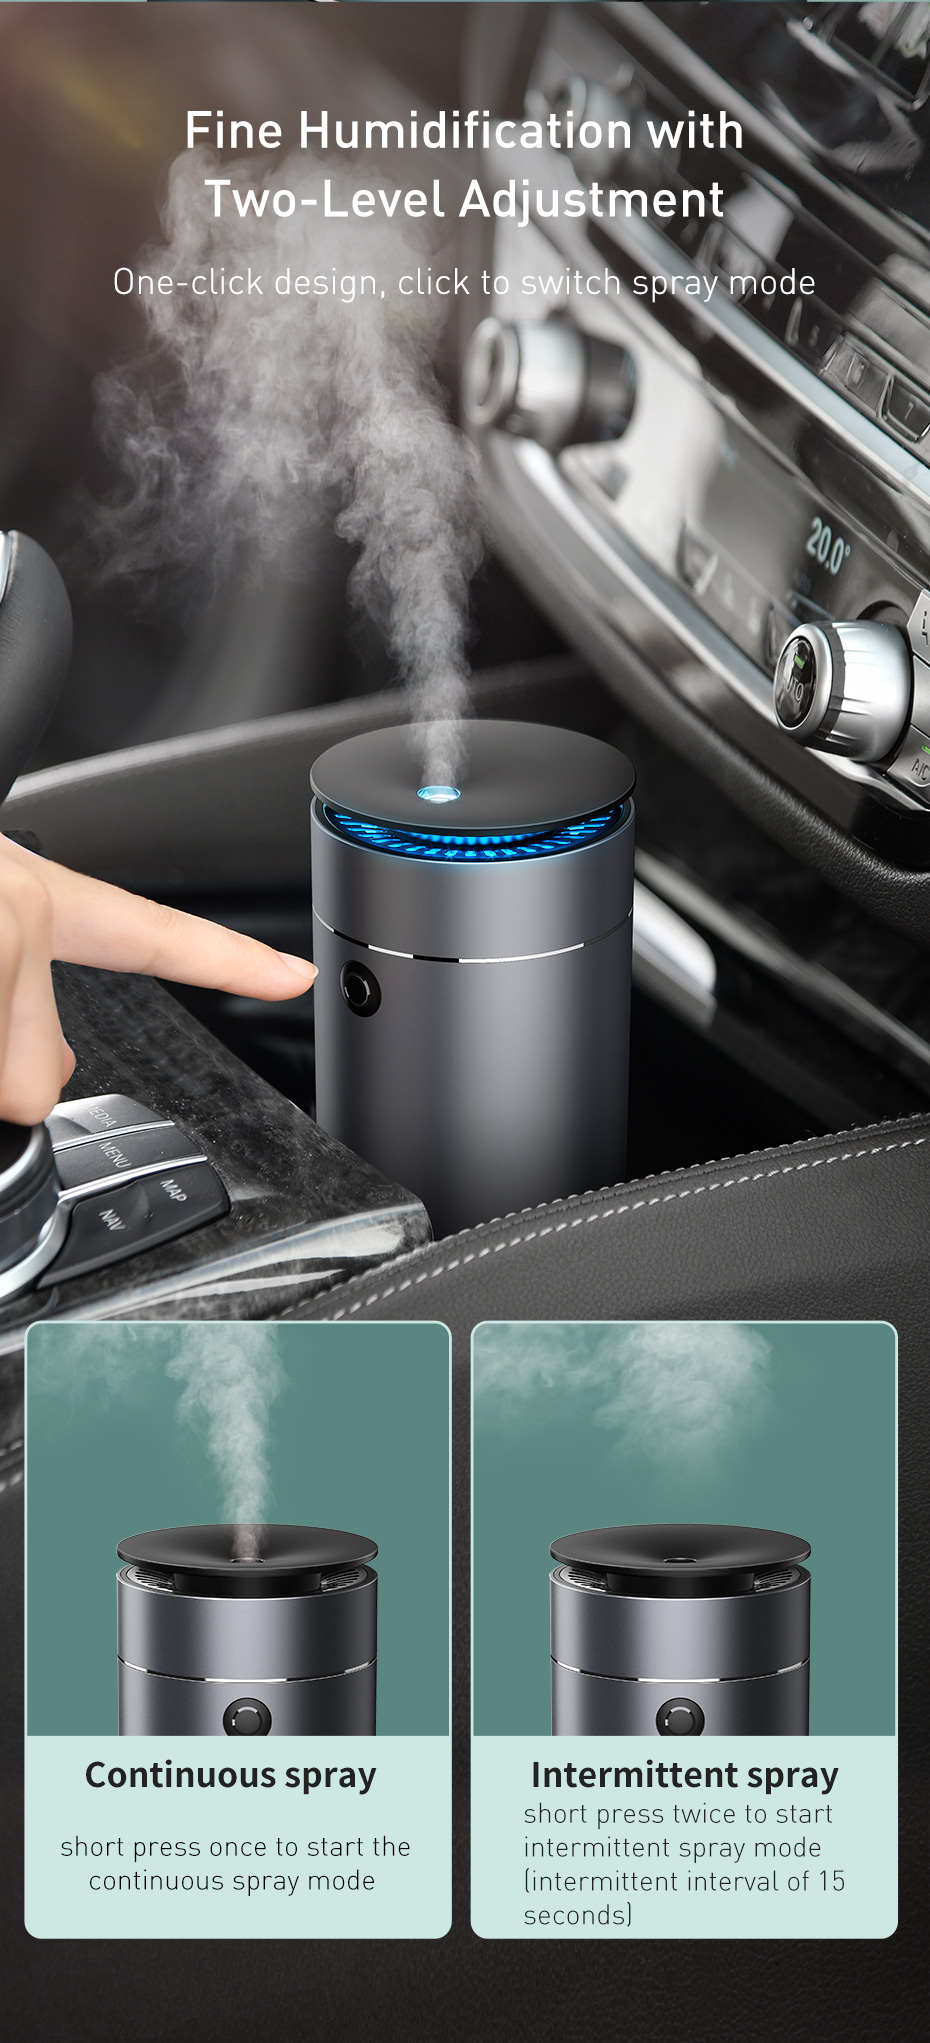 Baseus Car Air Humidifier Aroma Diffuser For Home Bedroom Car Air Freshener Essential Oil Diffuser Humidifier Sprayer Mist Maker